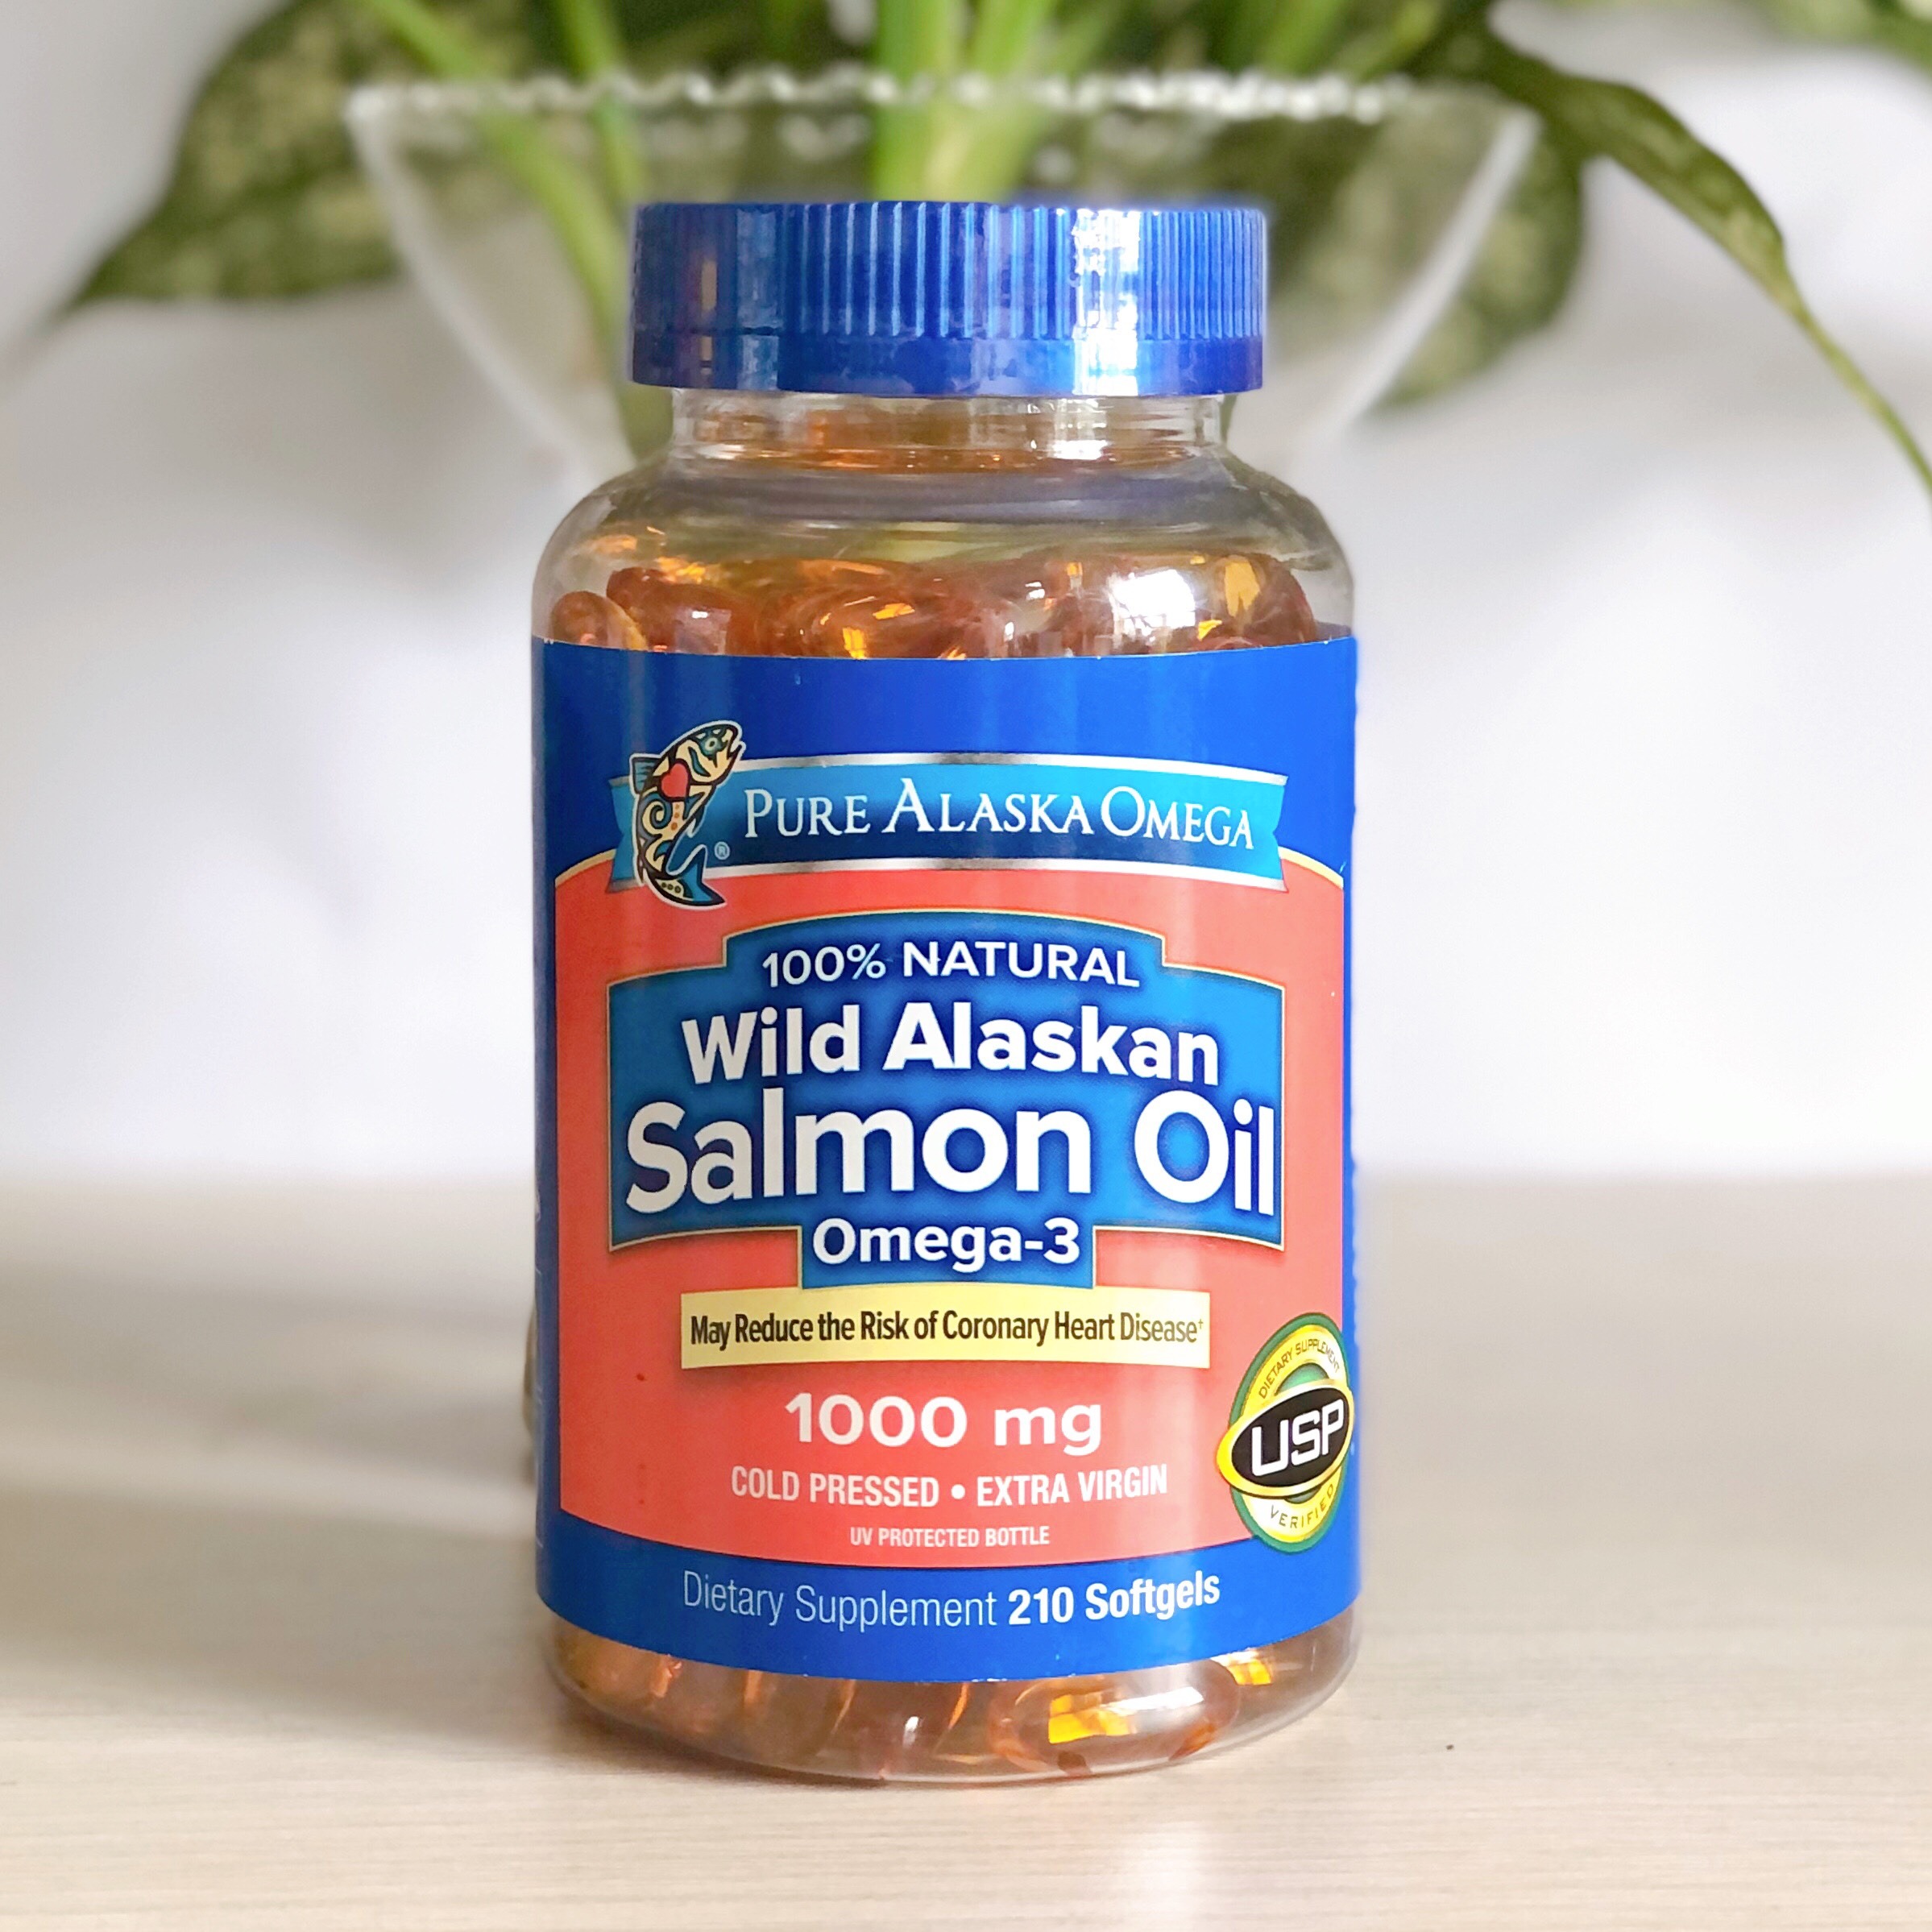 dau ca hoi pure alaska omega wild alaskan salmon oil omega 3 1000mg review